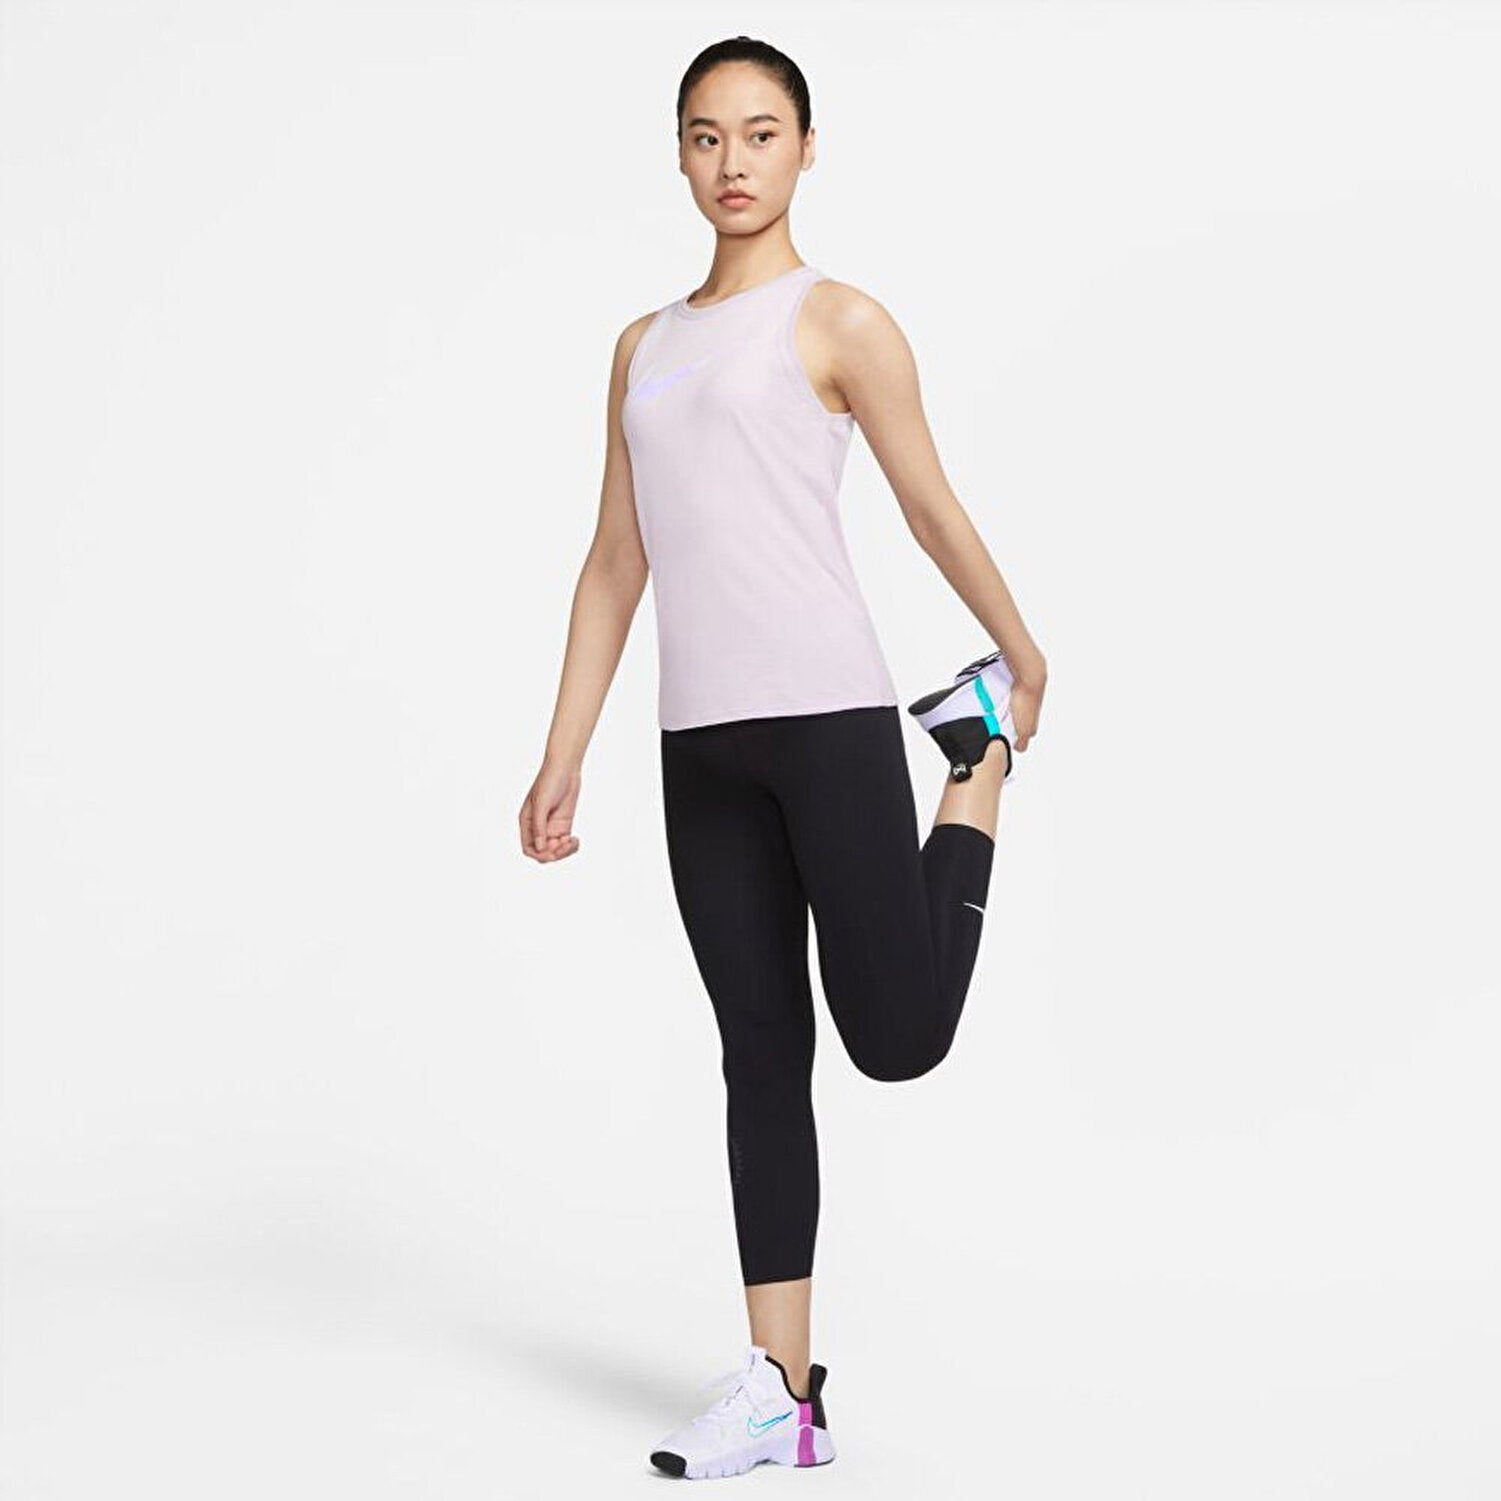 Nike Dry-FIT pink tank top women